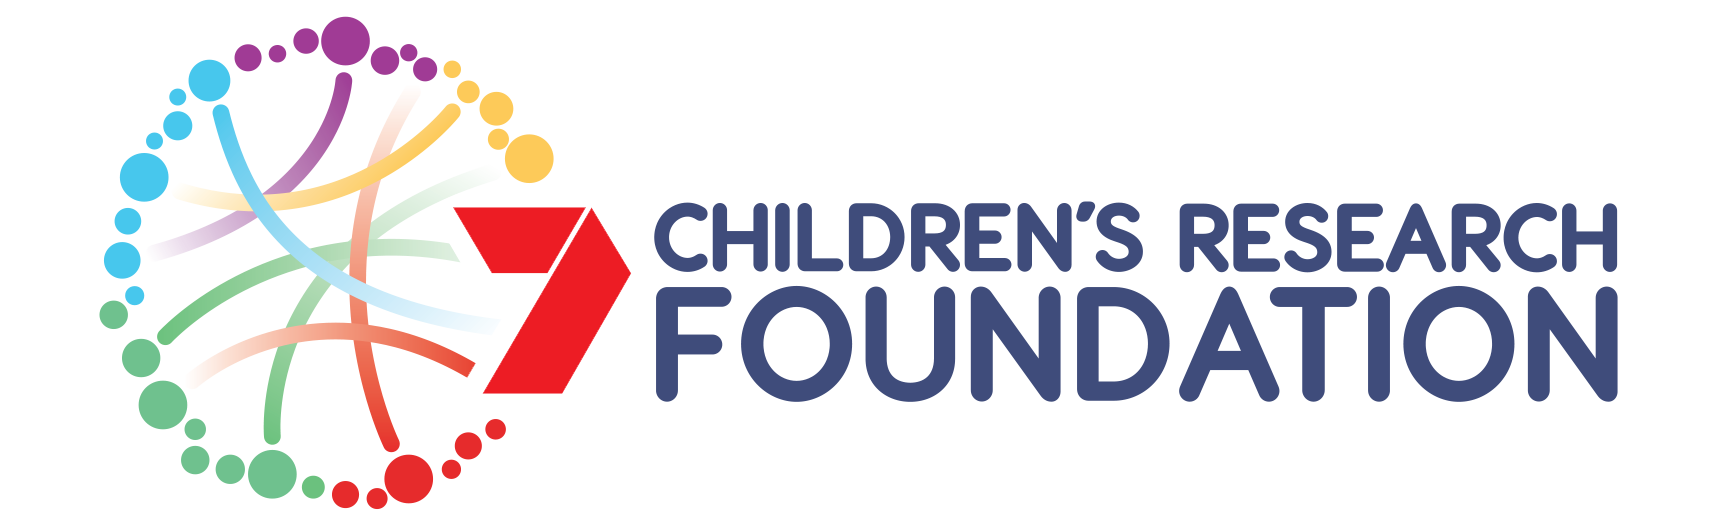 Children's Research Foundation